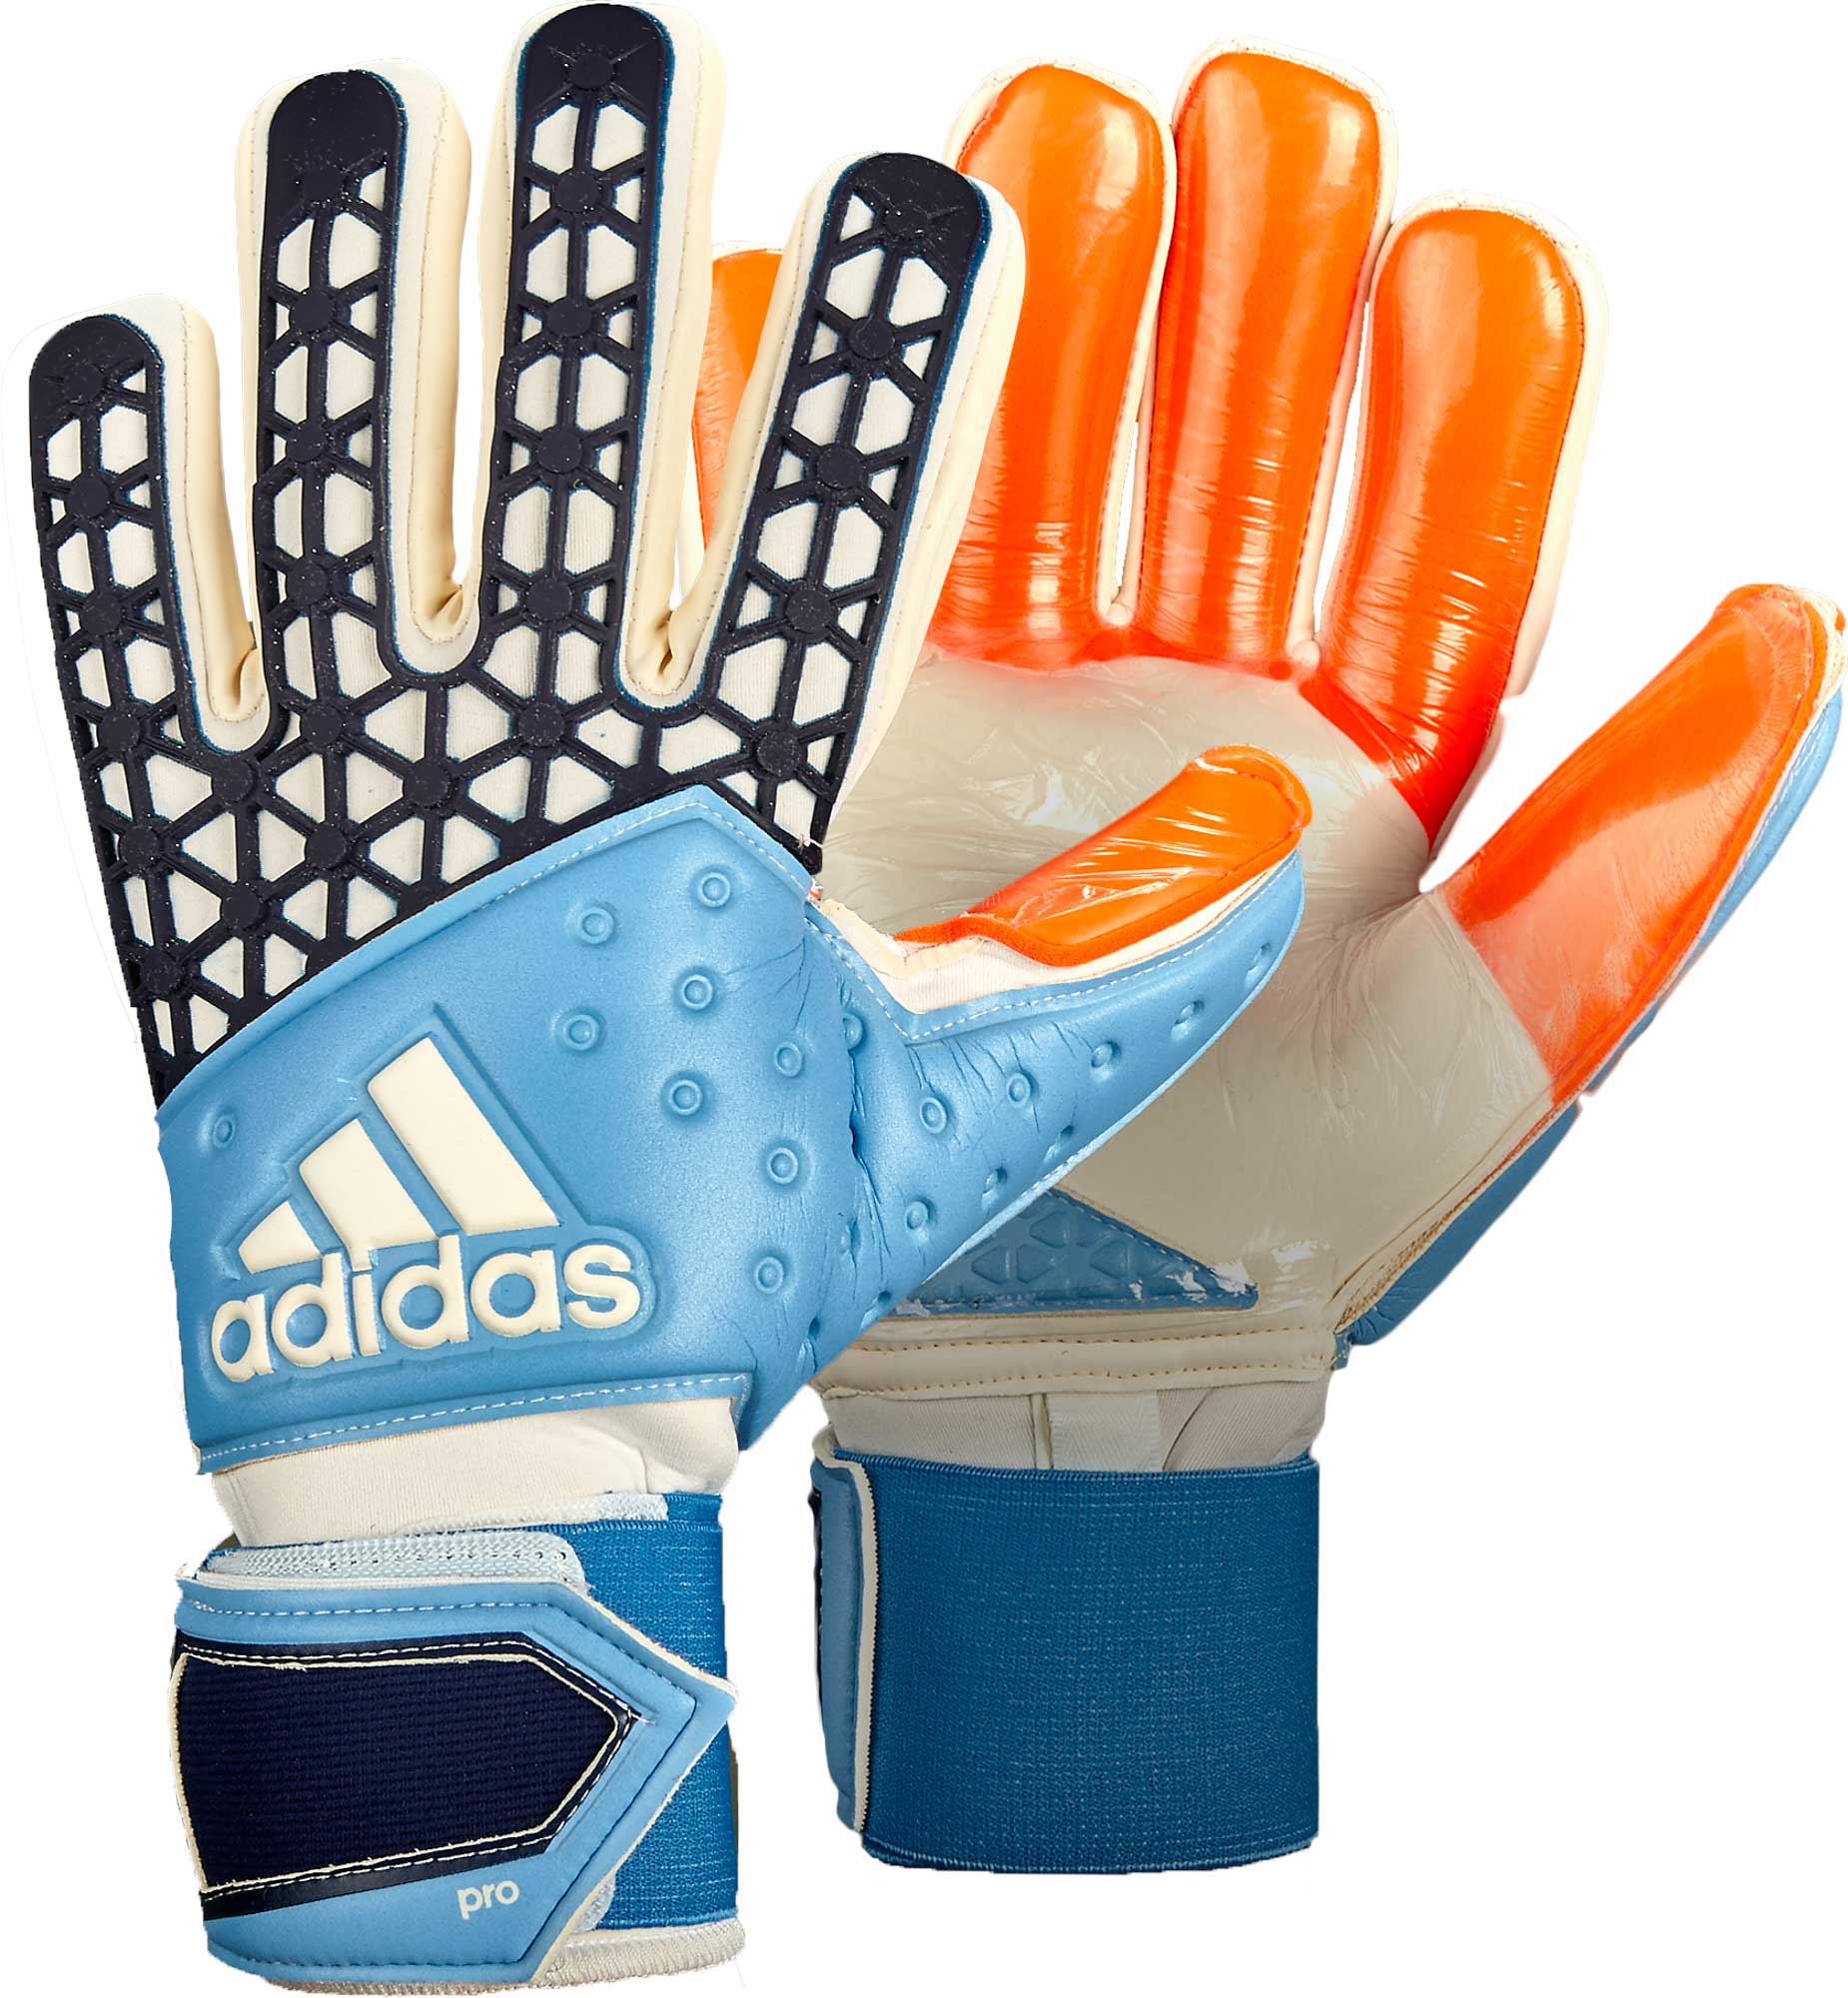 adidas Ace Zones Pro - Manuel Neuer Goalkeeper Gloves